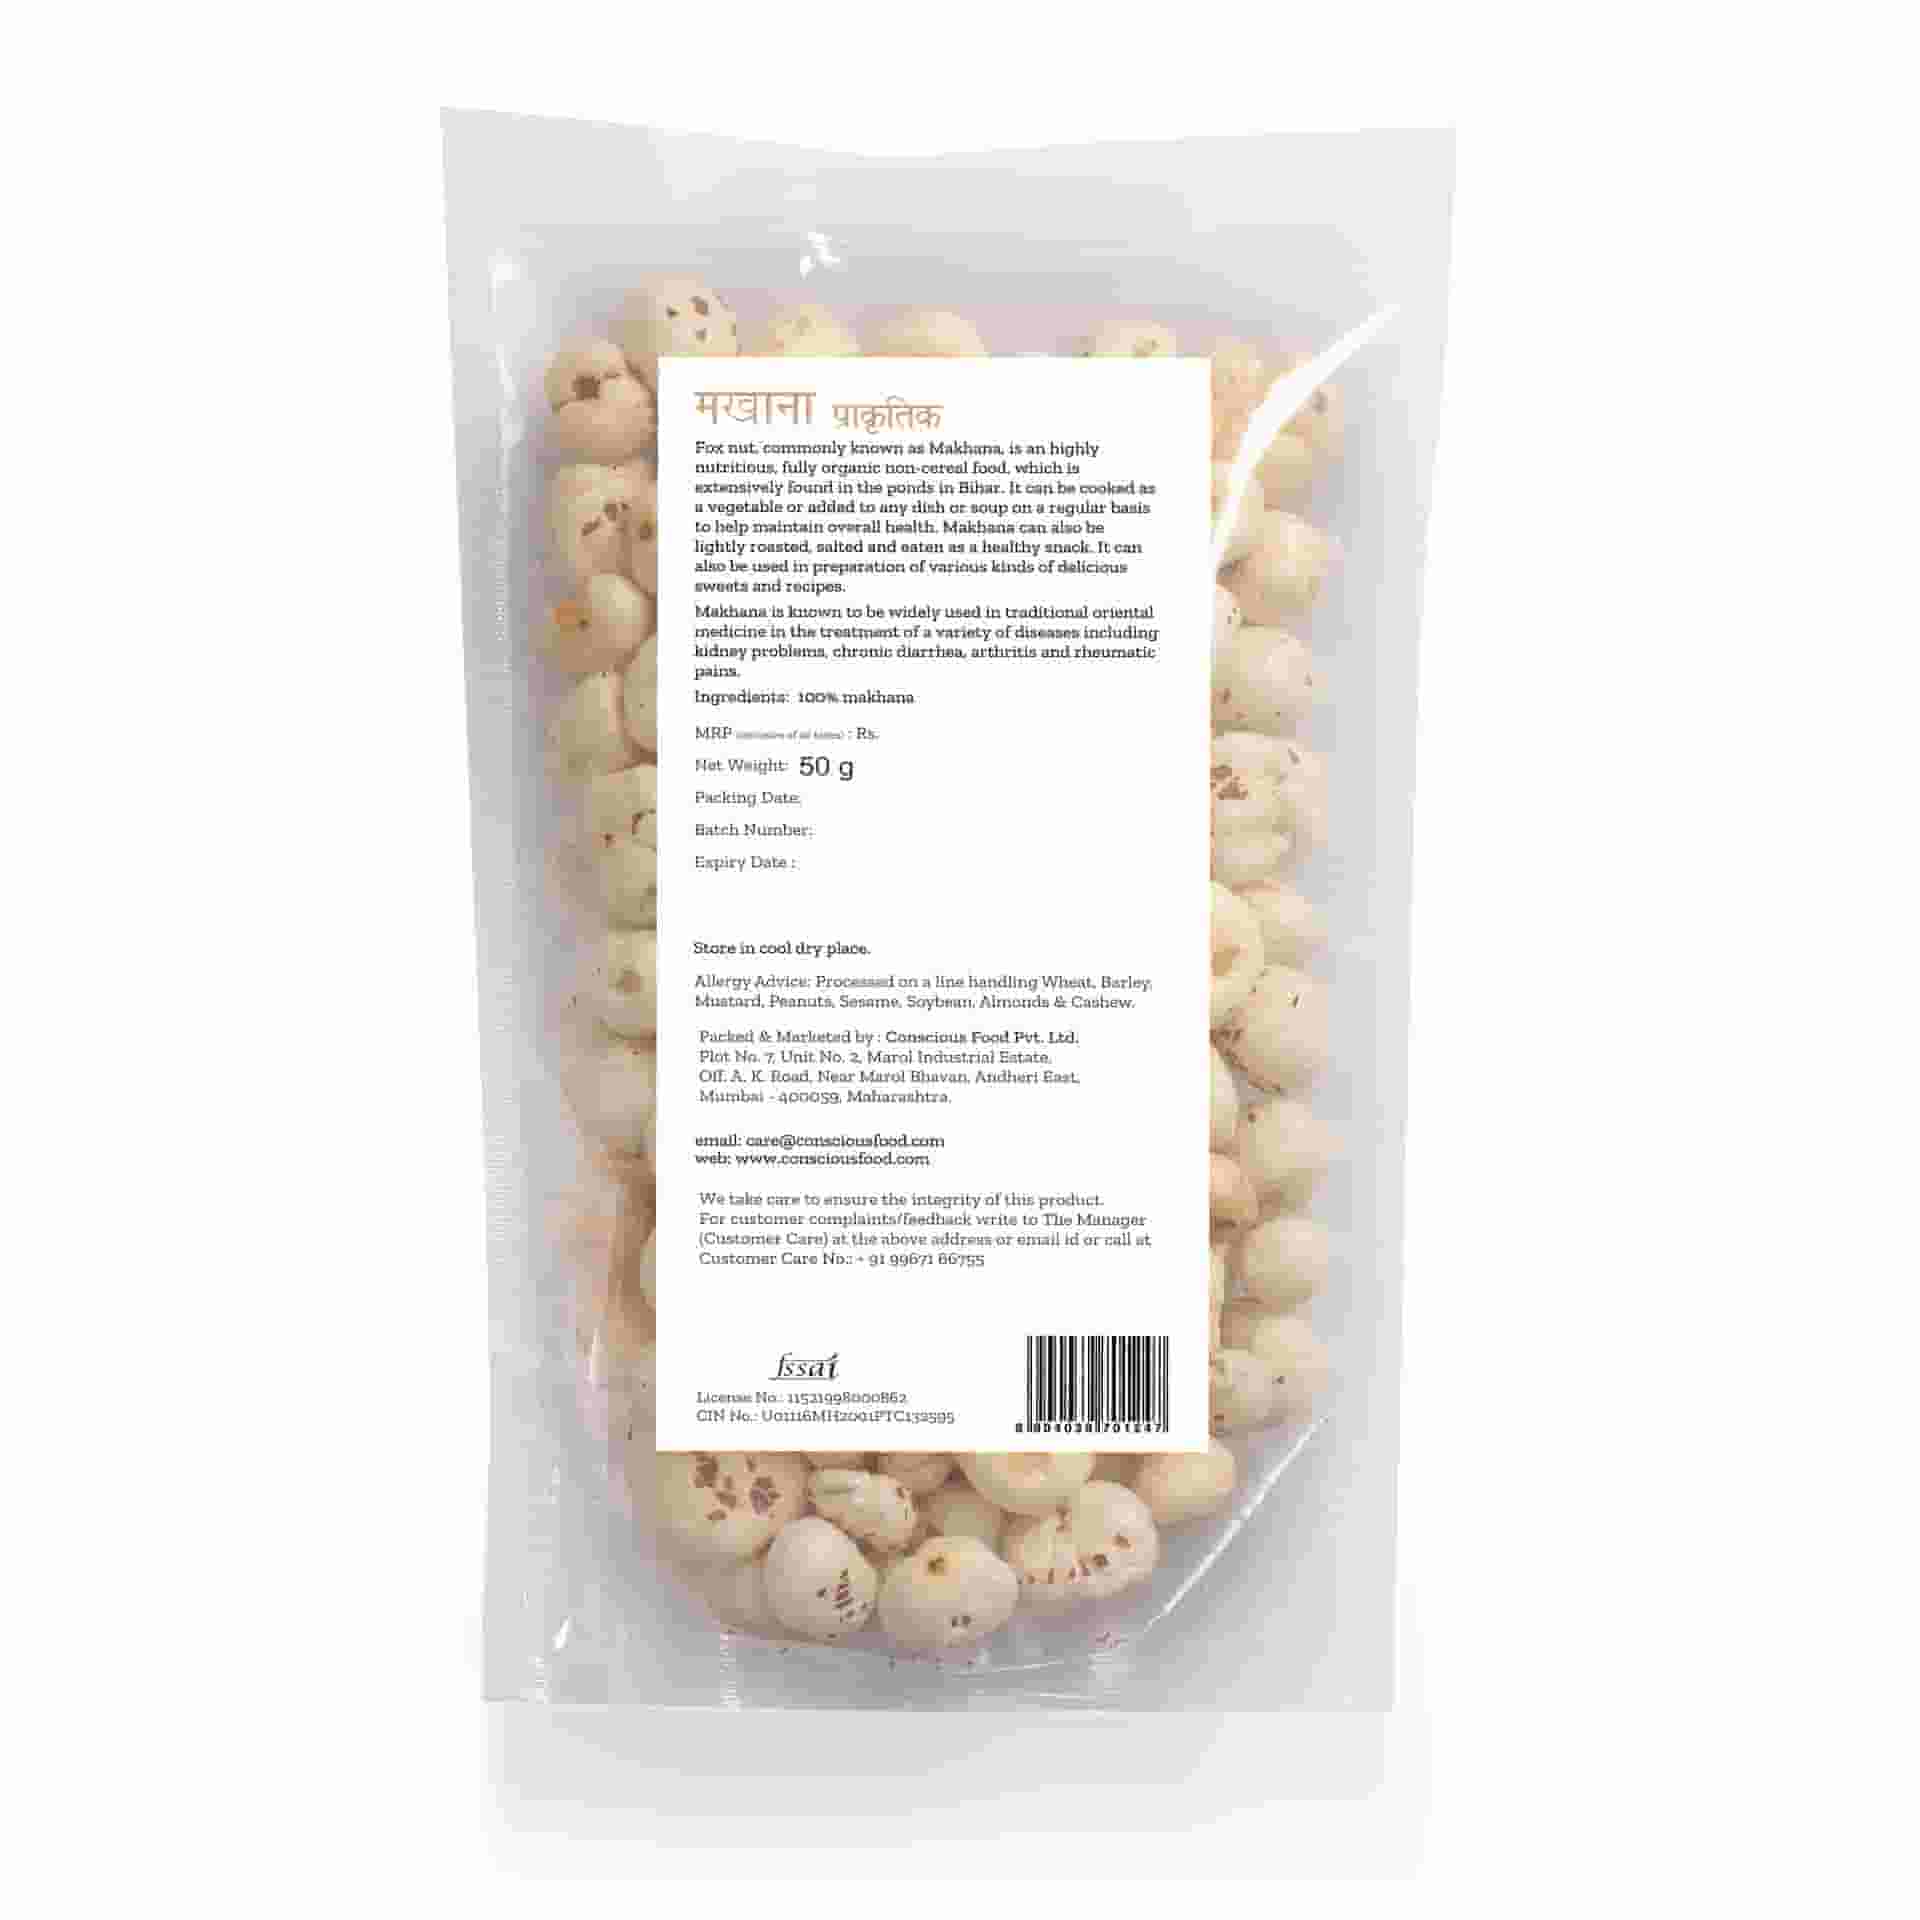 Conscious Food Fox Nut Puffed (Makhana) 50g